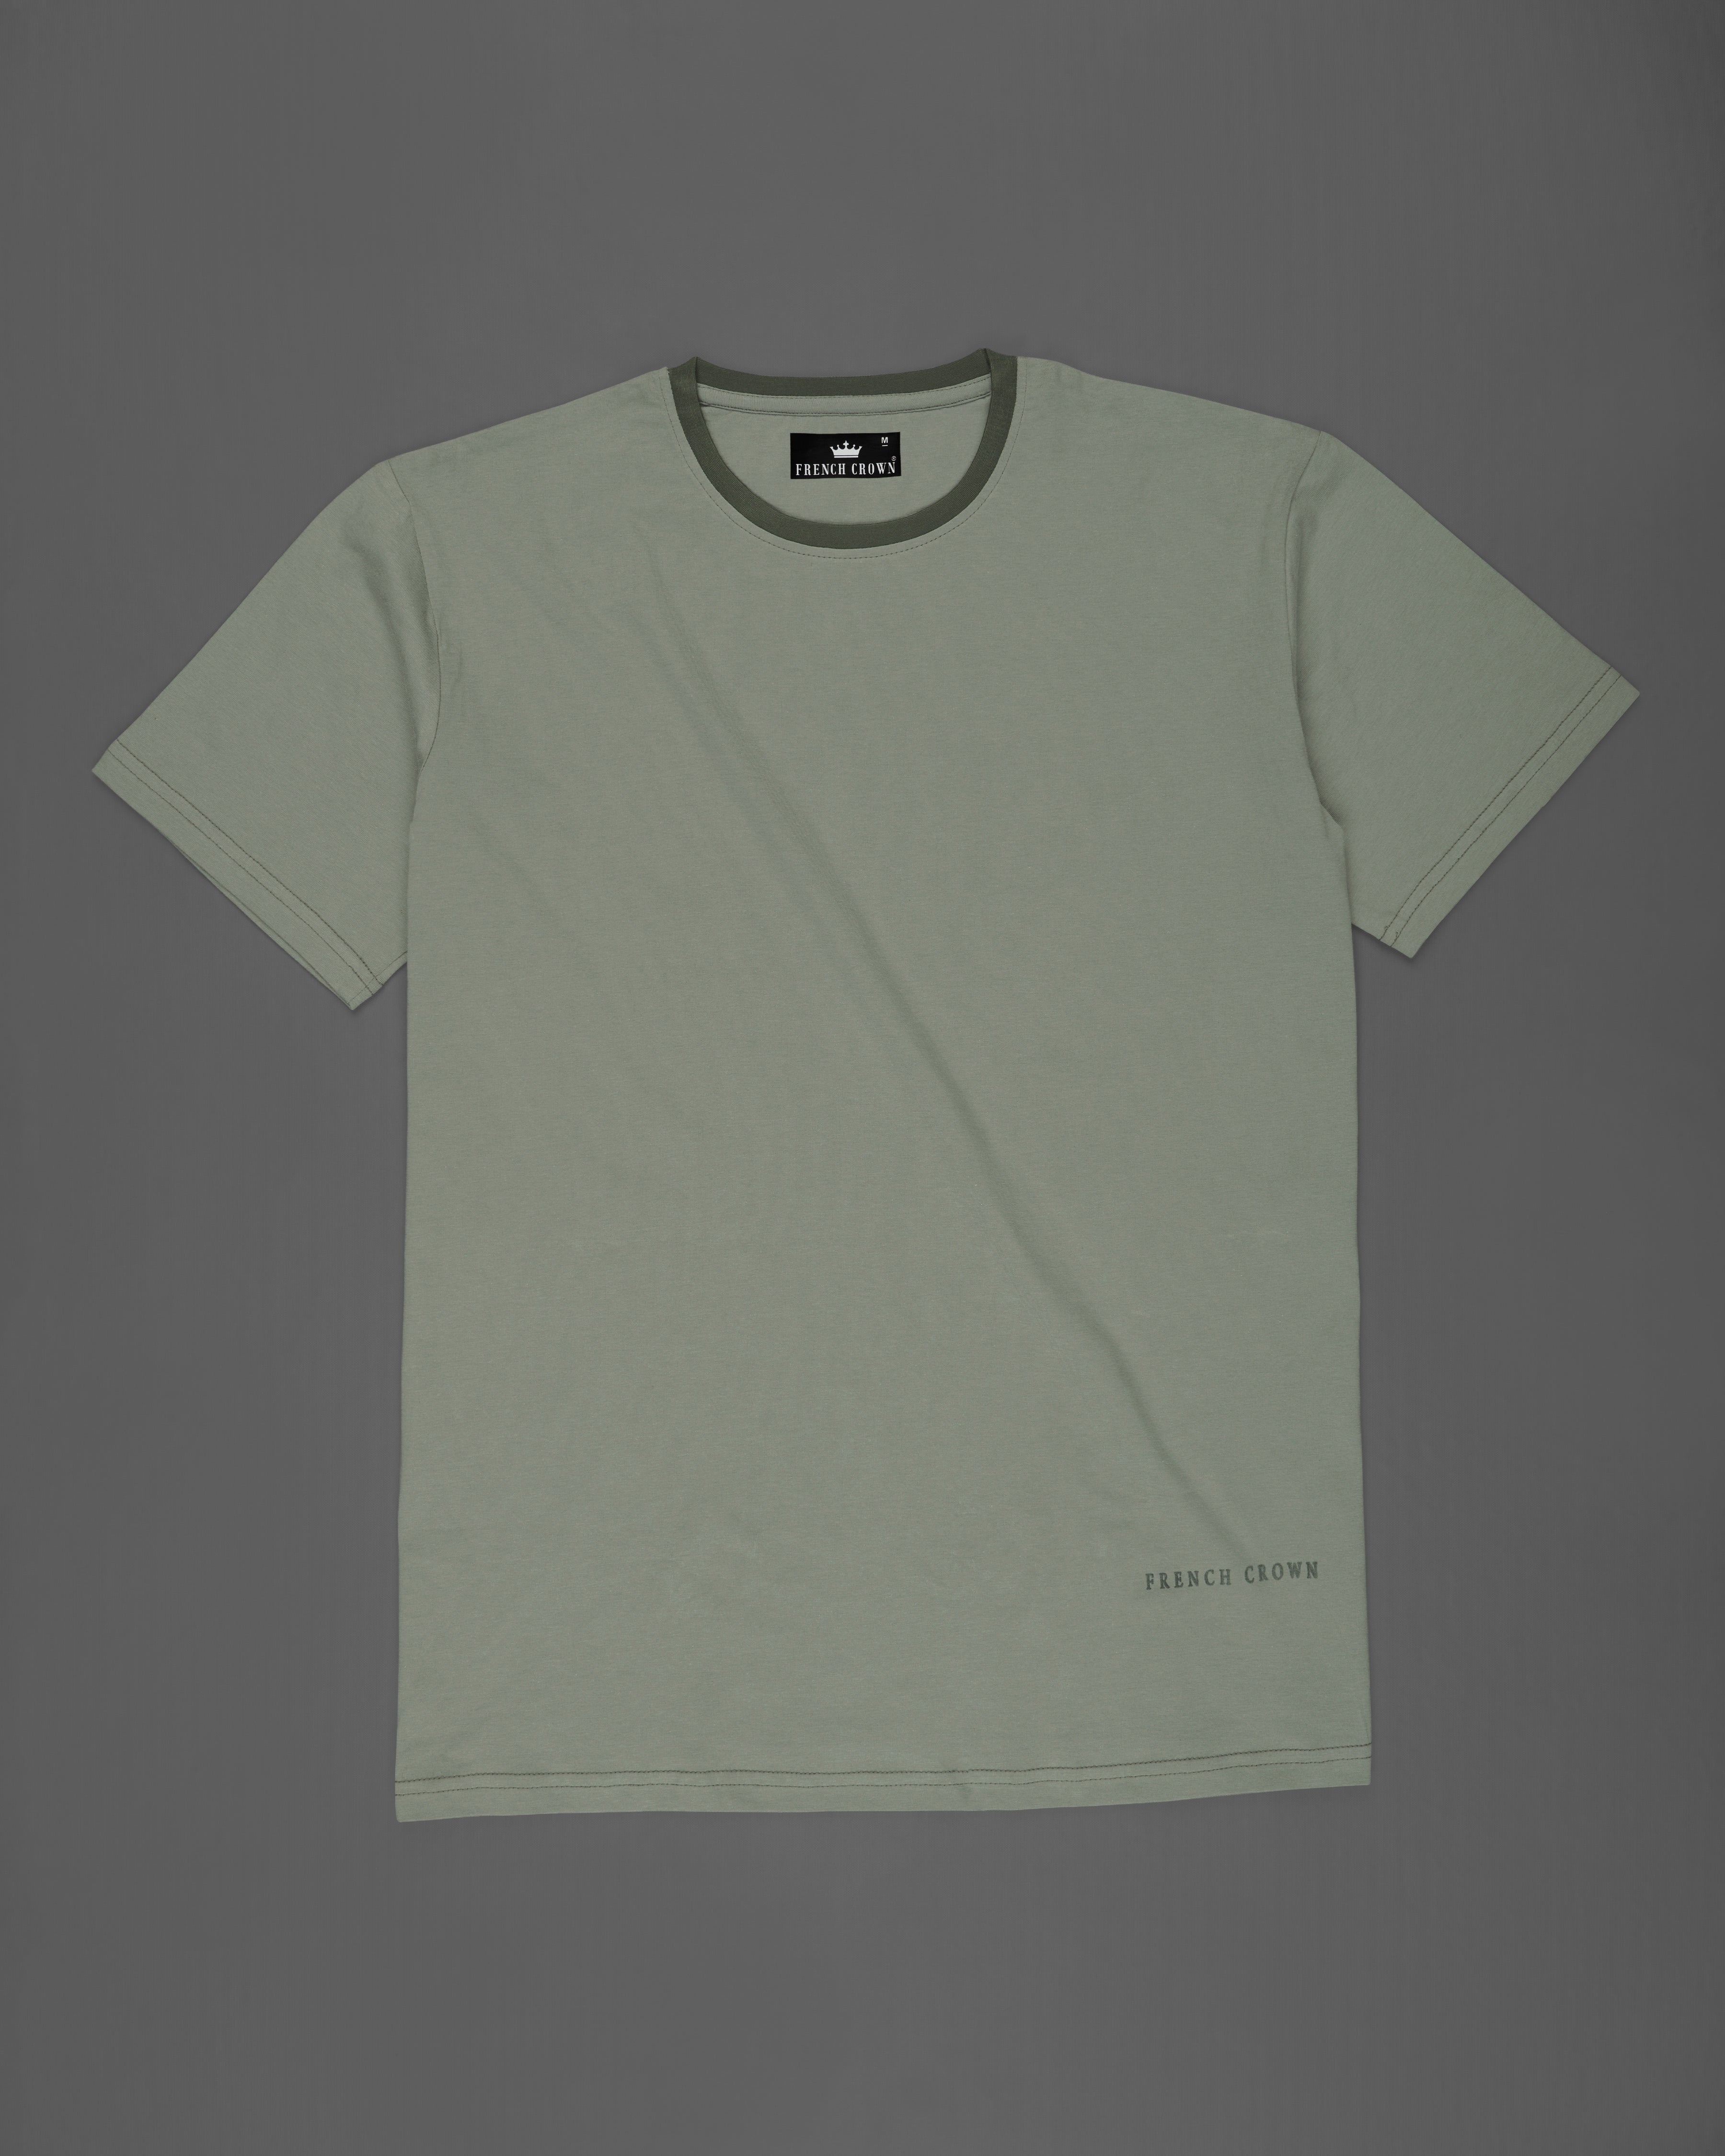 Granite Green Premium Cotton T-shirt TS657-S, TS657-M, TS657-L, TS657-XL, TS657-XXL